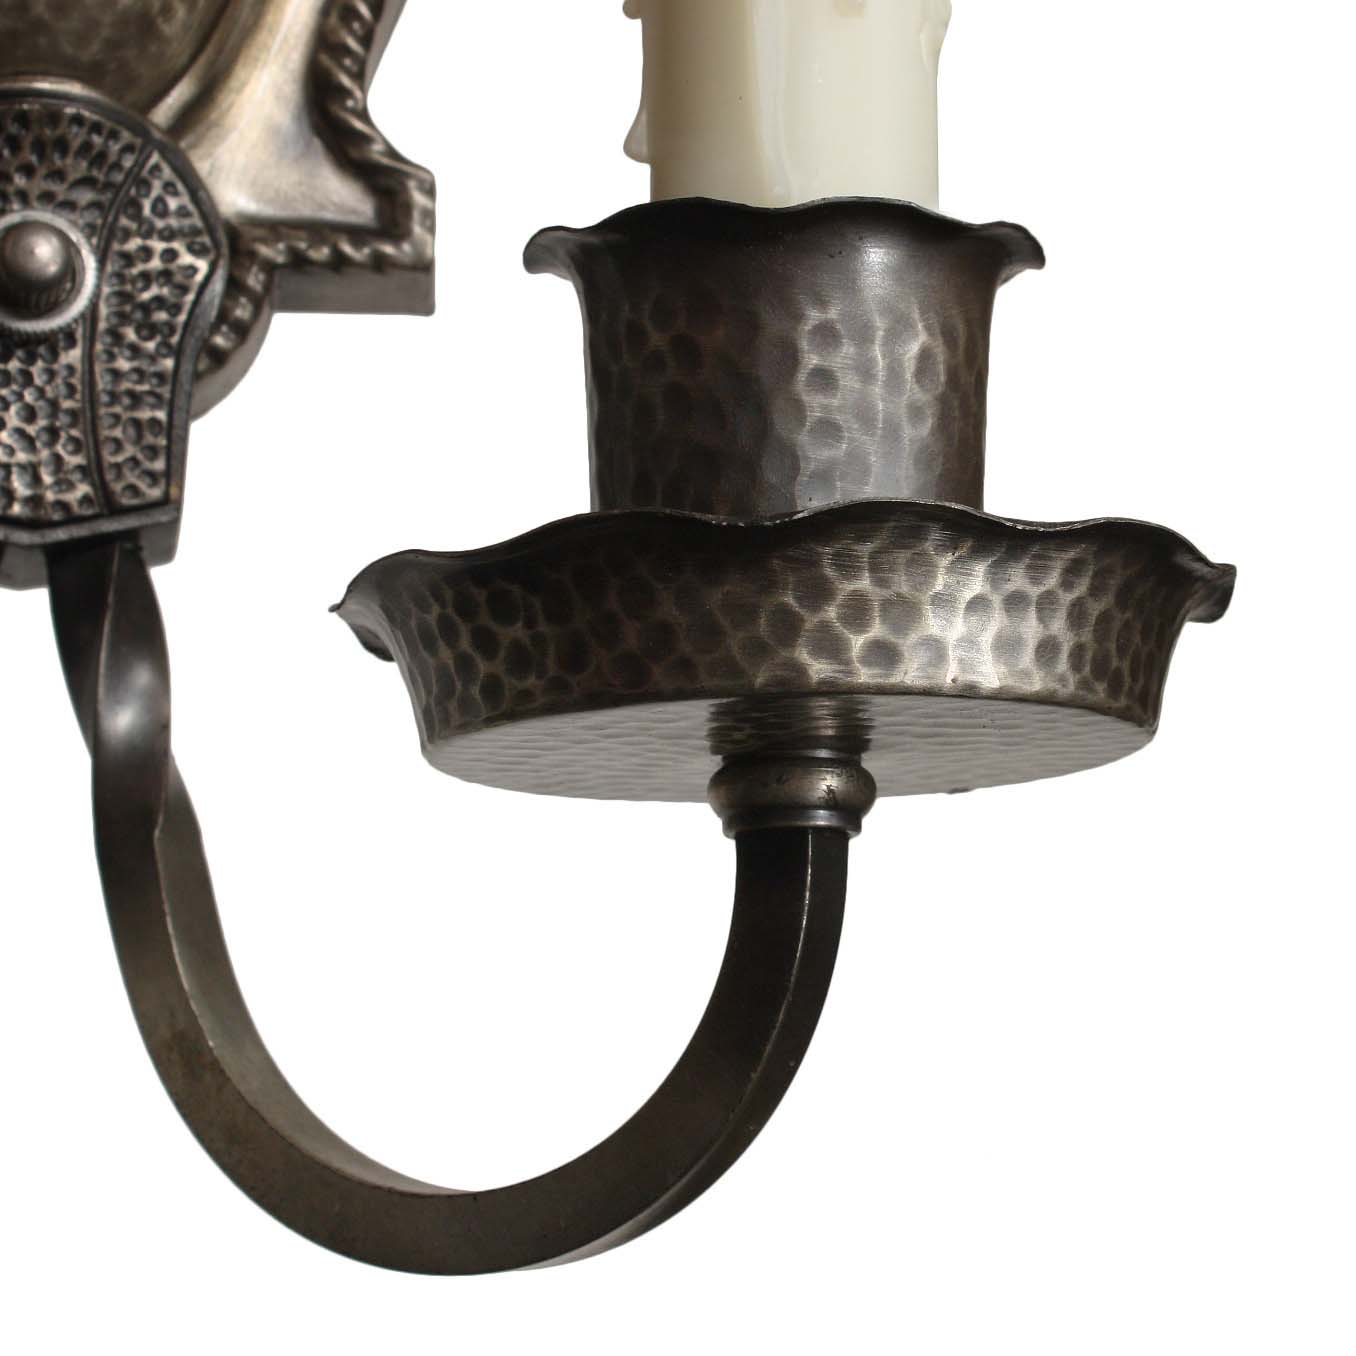 Tudor Sconce Pair in Darkened Nickel, Antique Lighting-59404